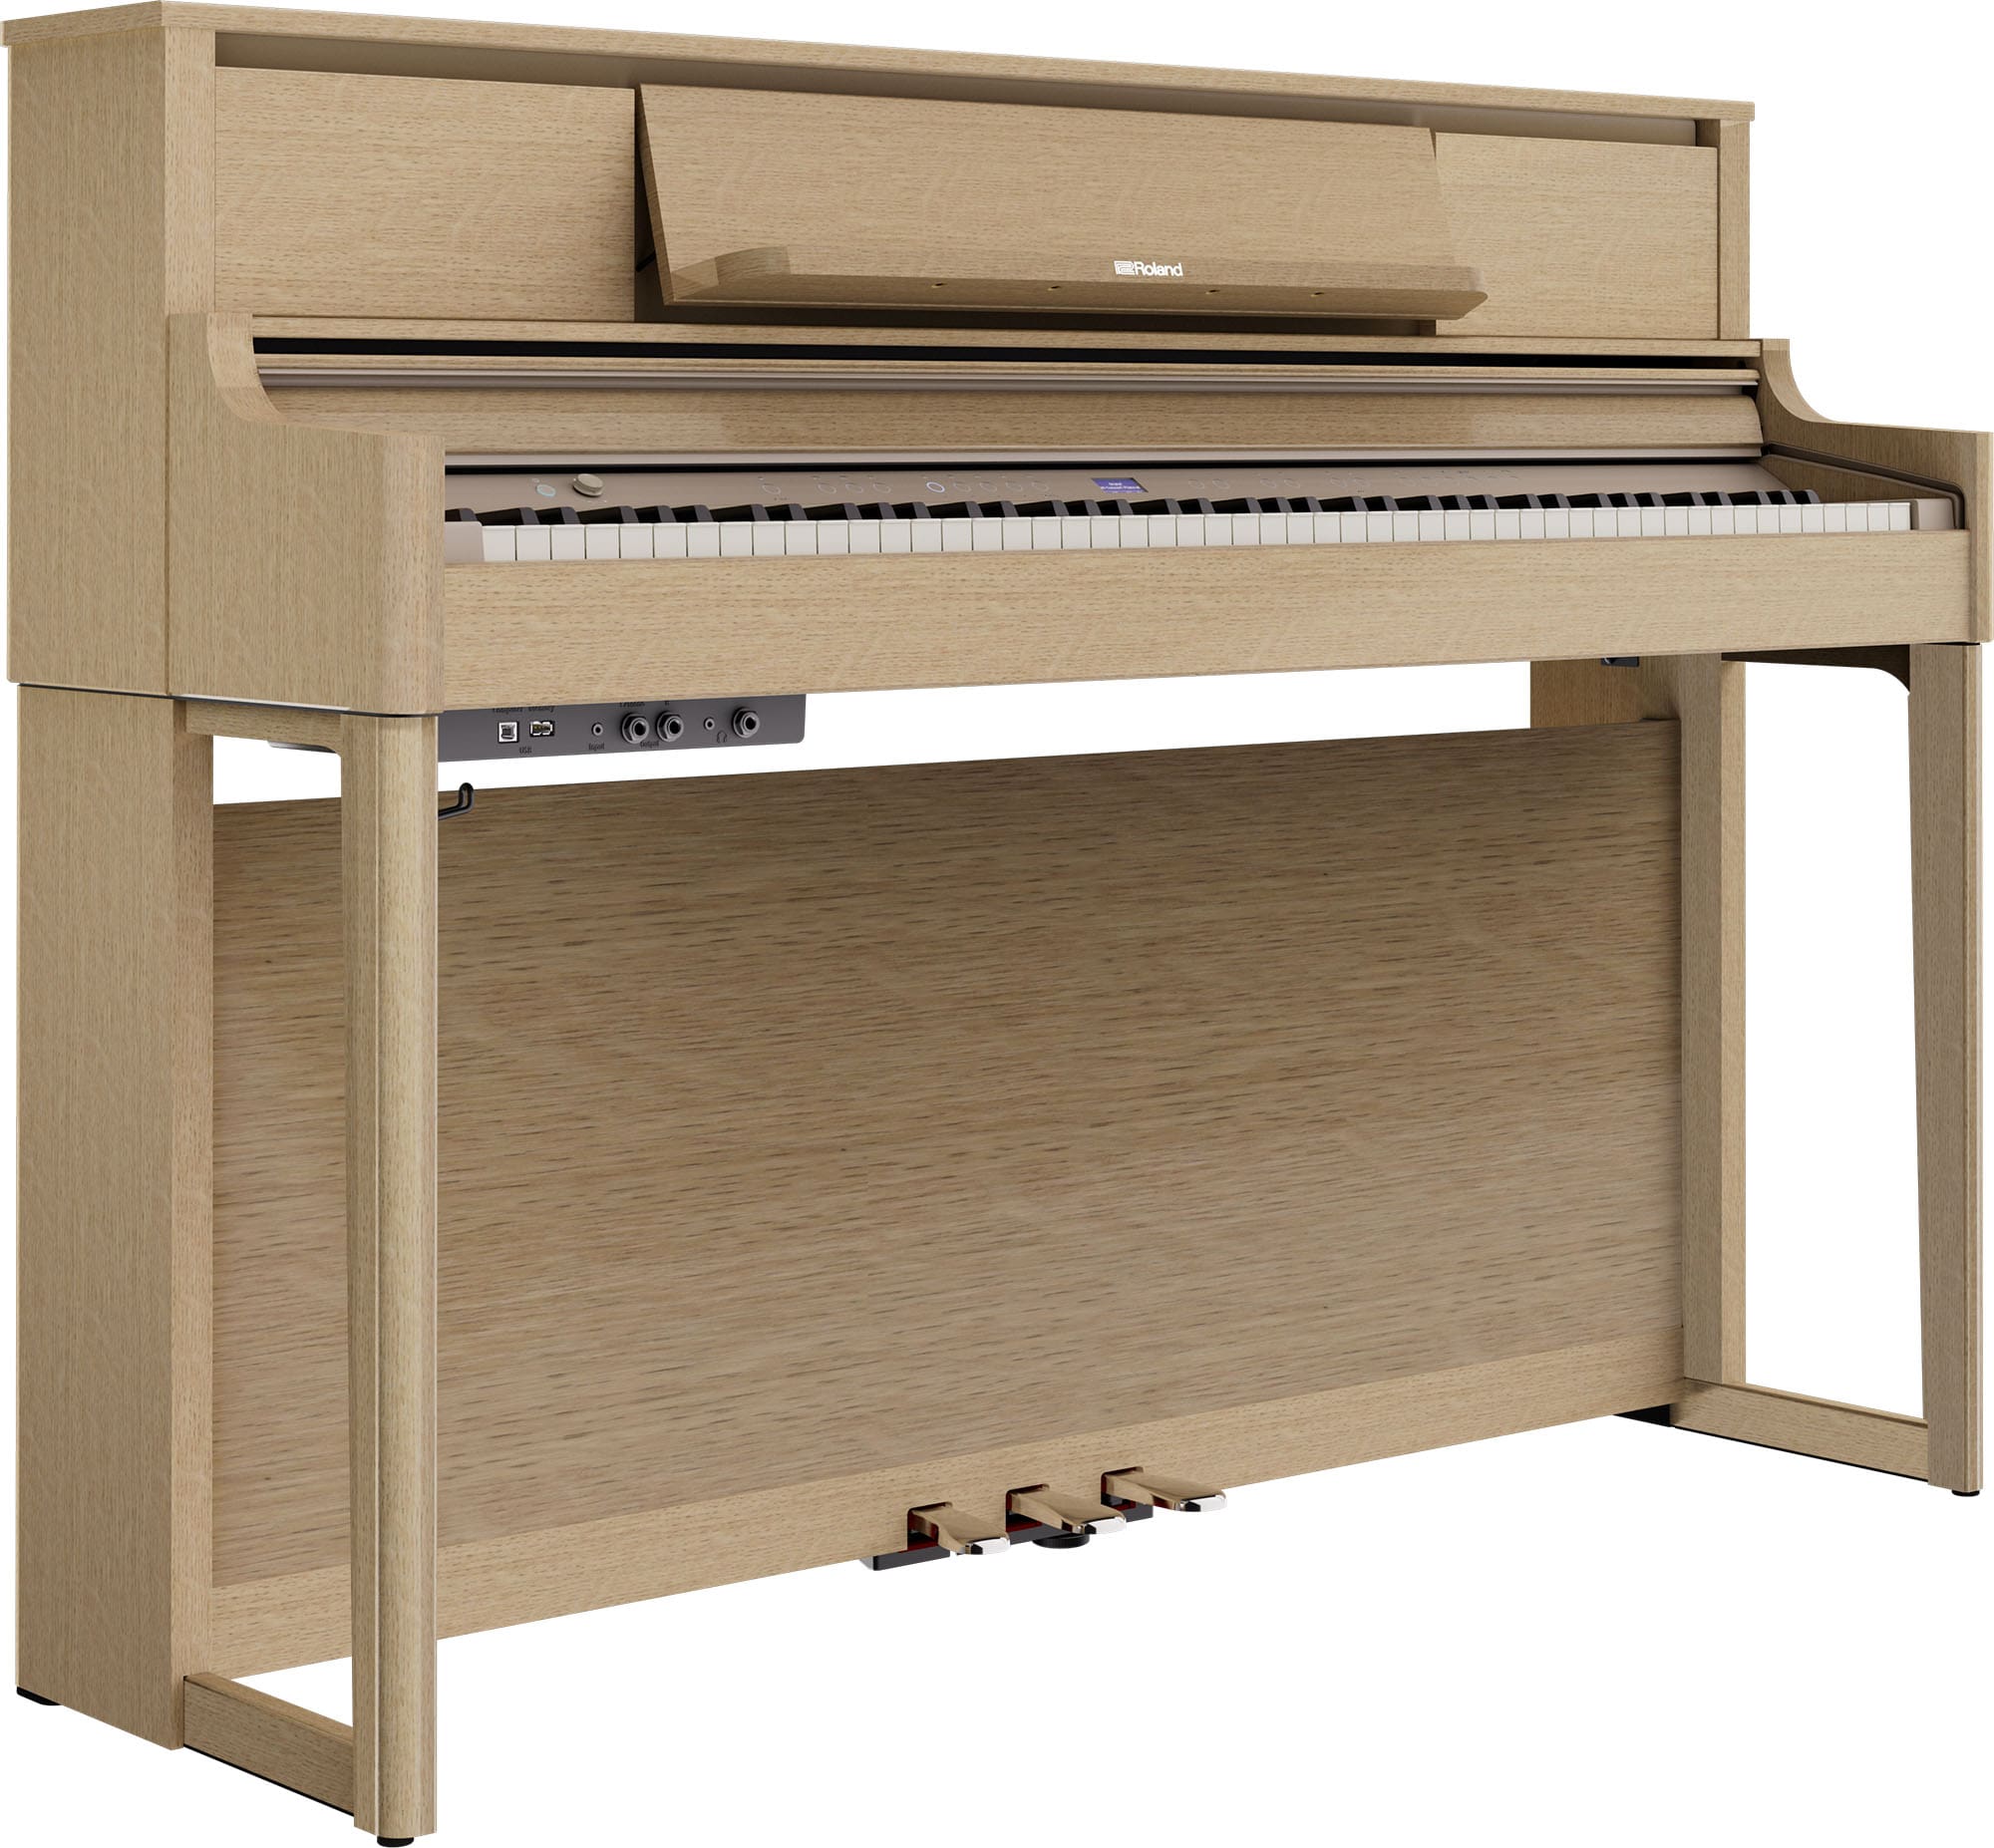 Roland Lx-5-la - Oak - Digital piano with stand - Variation 1